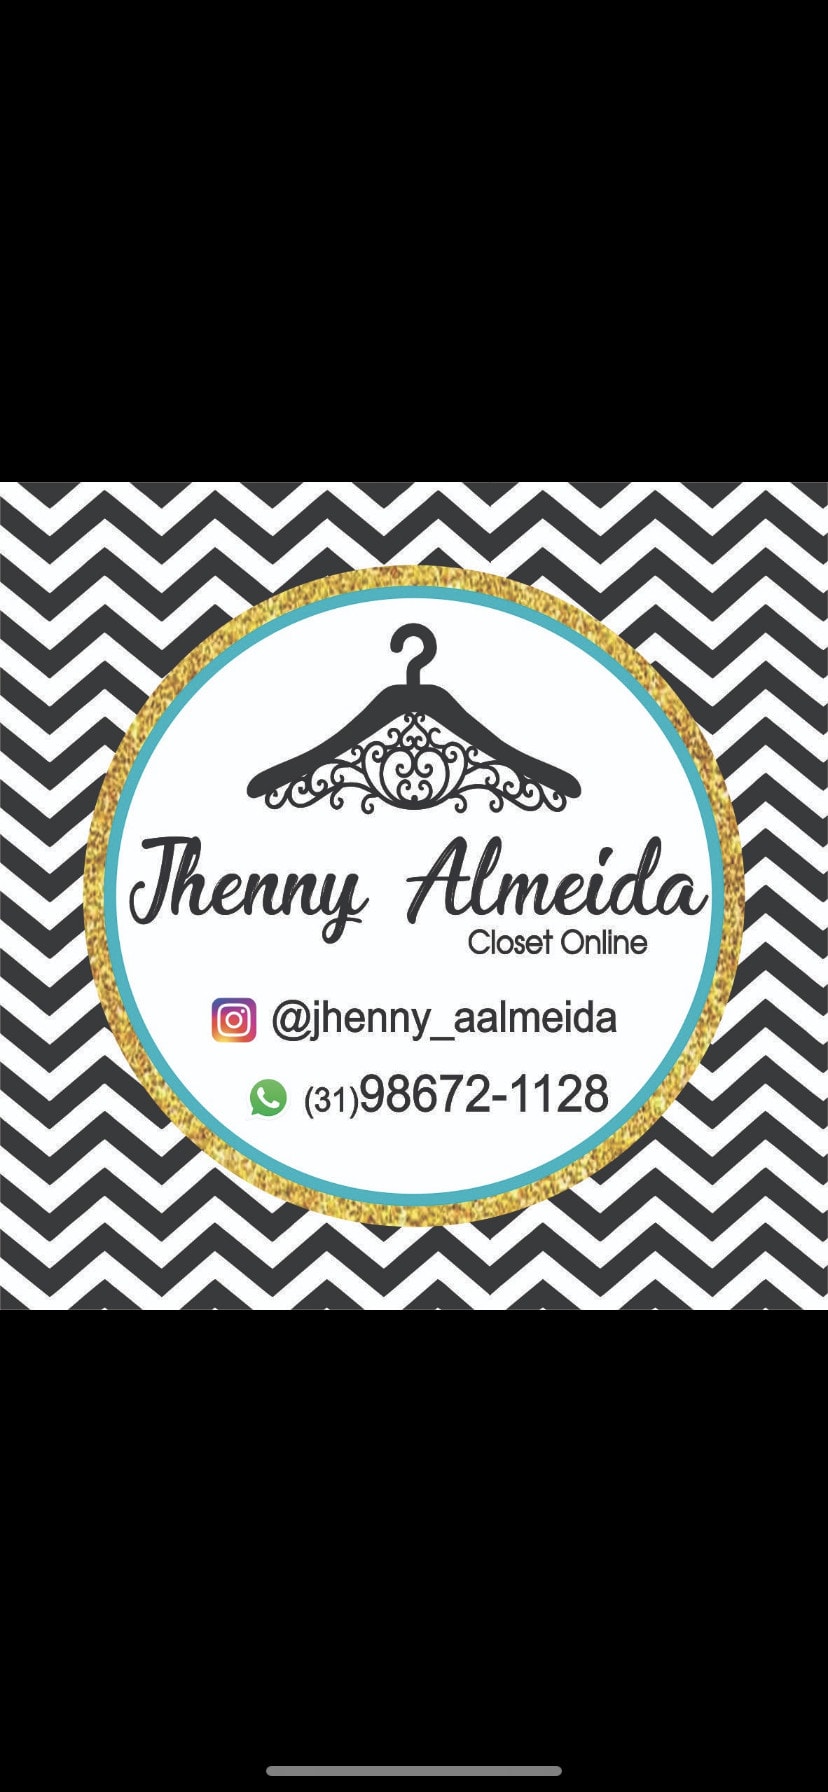 Jhenny Almeida Closet Online